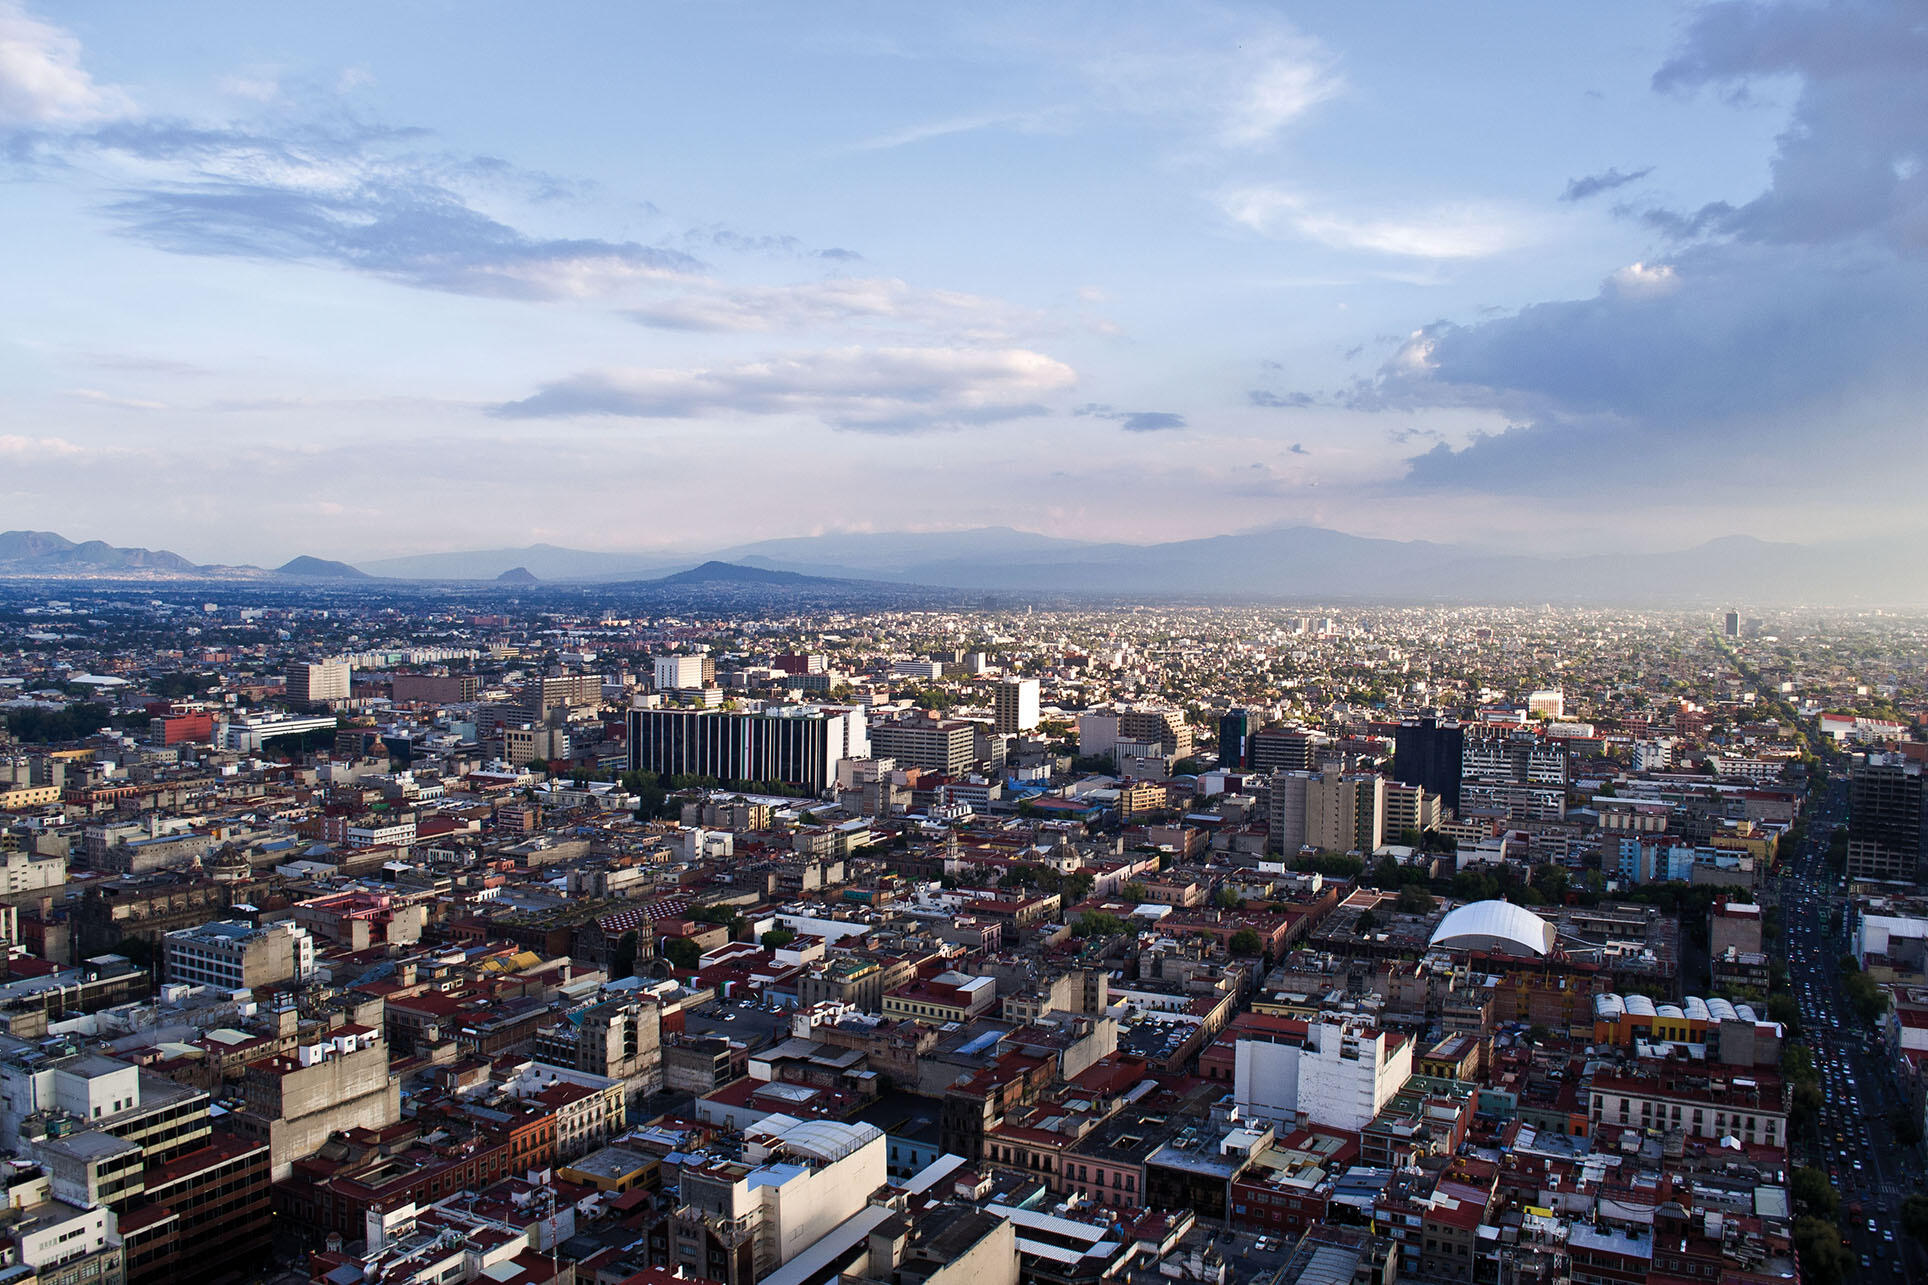 An aerial photo highlights the urban sprawl of Mexico City.  (Photo by Kasper Christensen.)